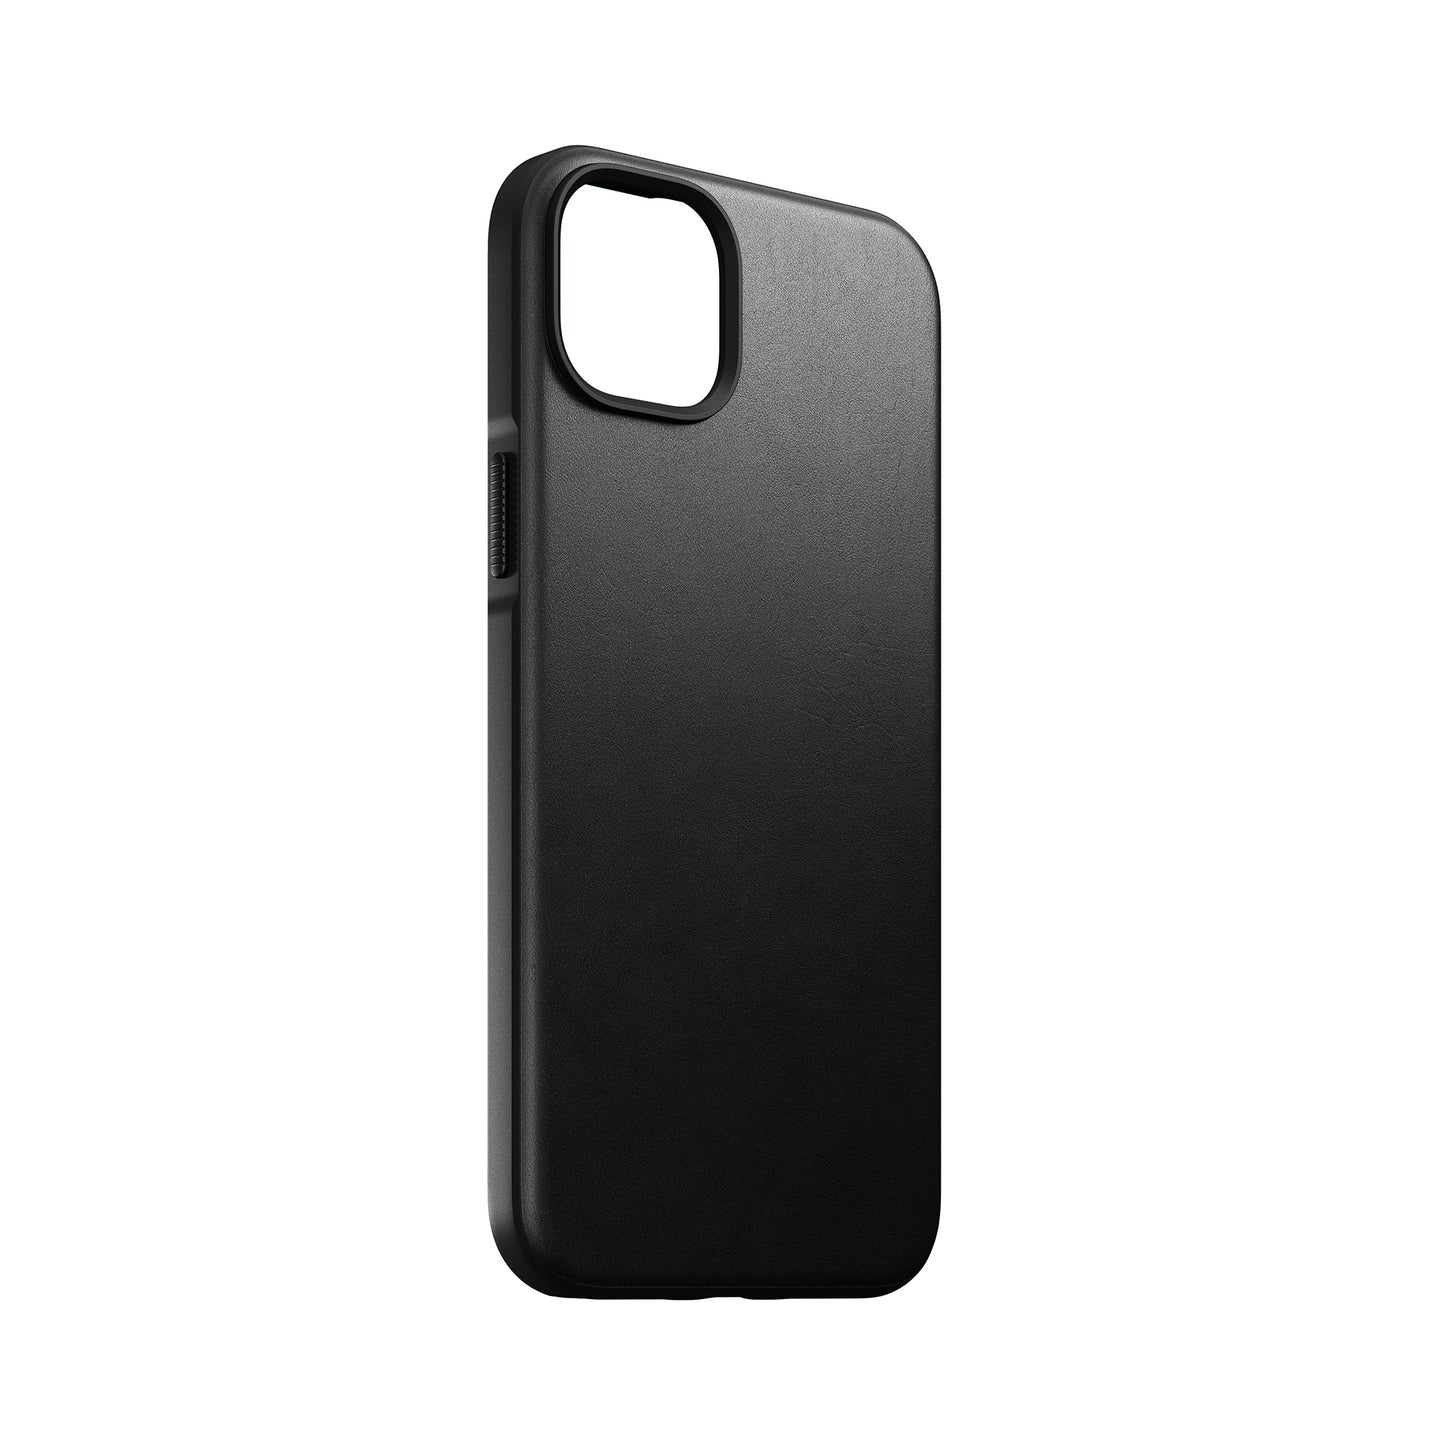 NOMAD Modern Leather Case/Nomad for iPhone 14 Plus - Black